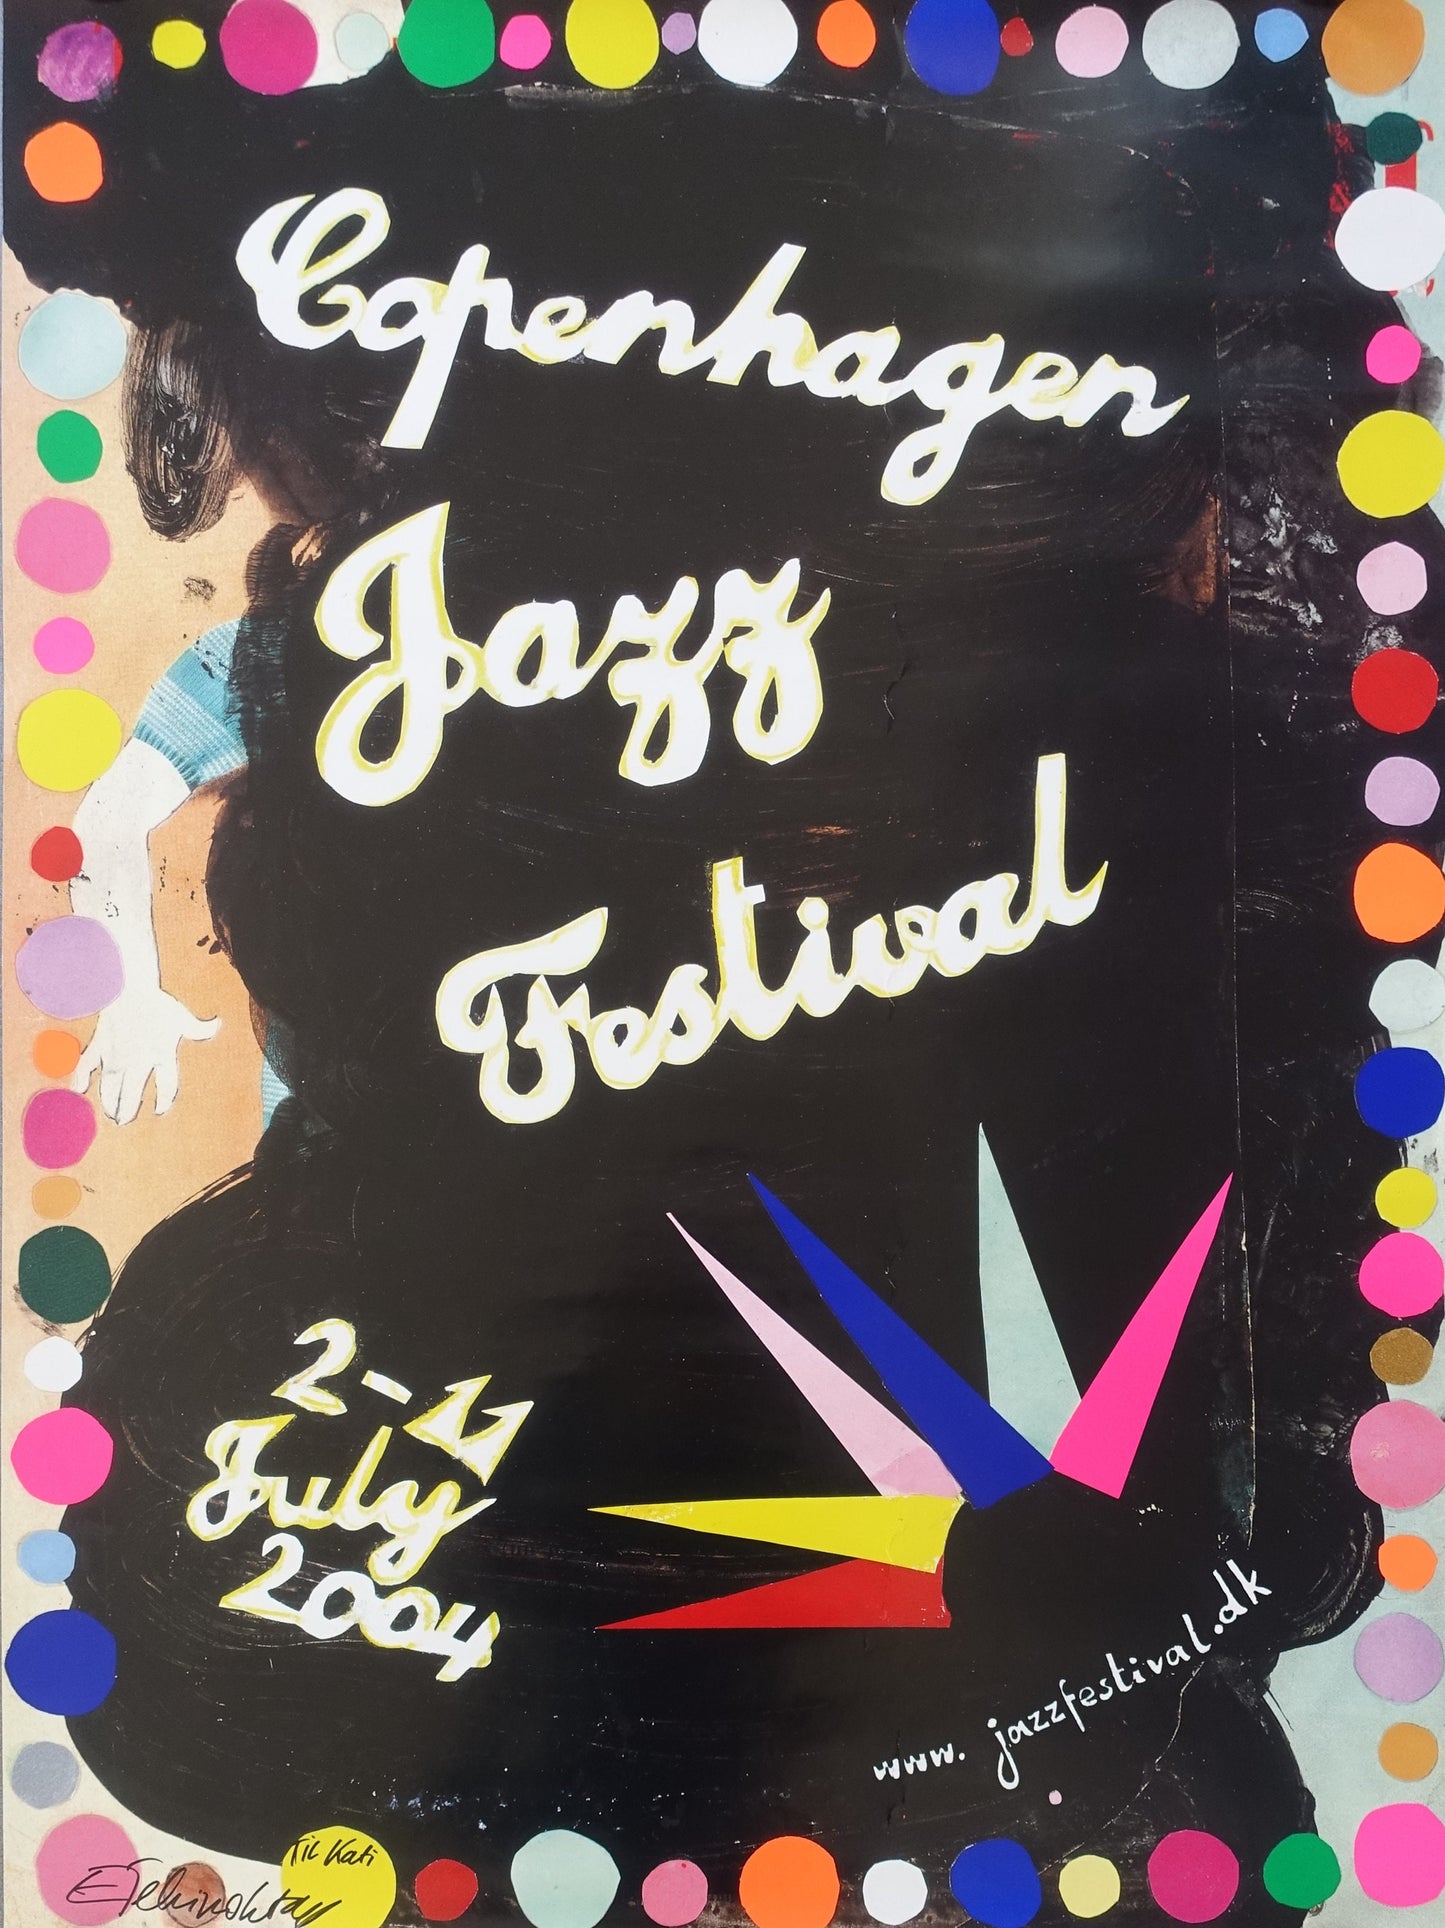 2004 Copenhagen Jazz Festival - Original Vintage Poster